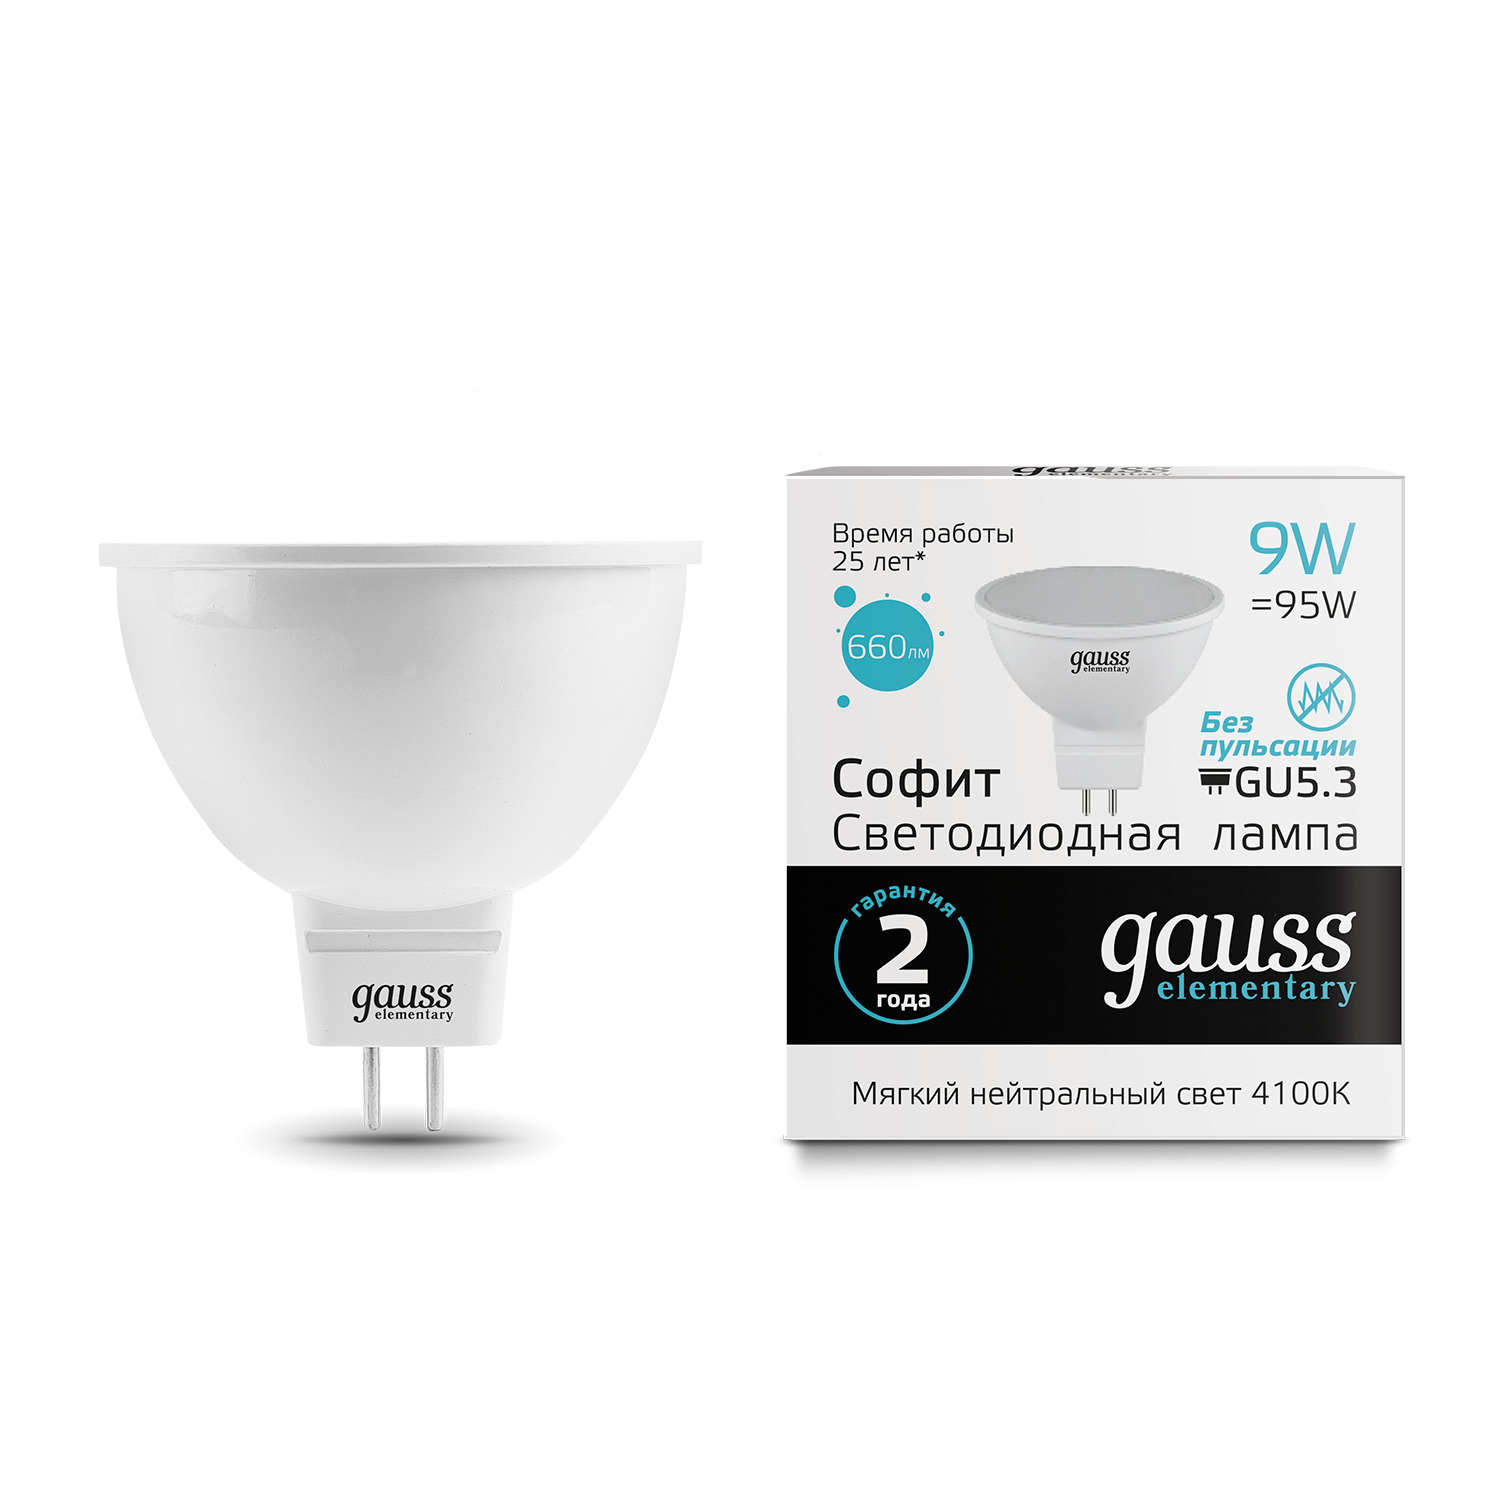 Лампа Gauss LED Elementary MR16 GU5.3 9W 4100K gauss led elementary globe 6w e14 4100k 1 10 50